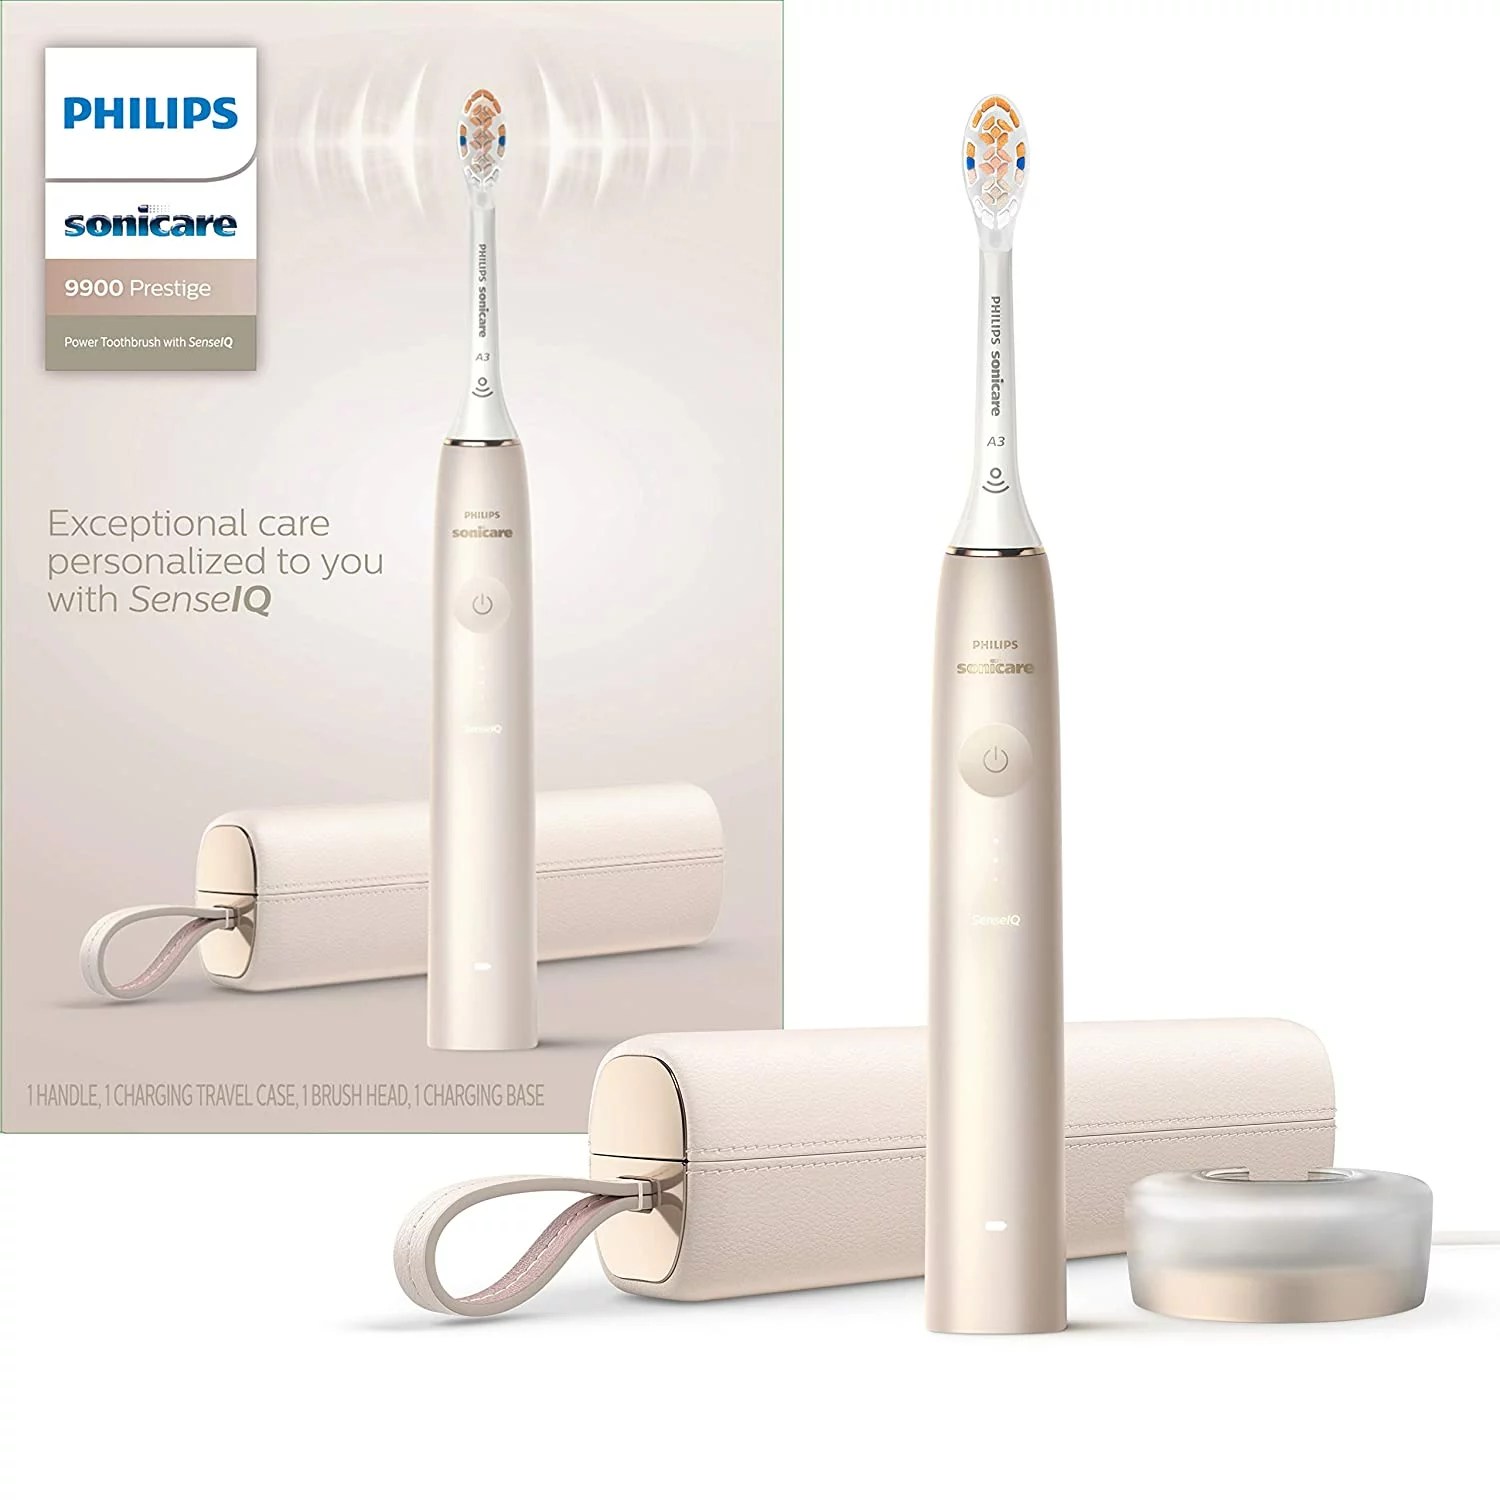 Philips Sonicare 9900 Prestige soft toothbrush